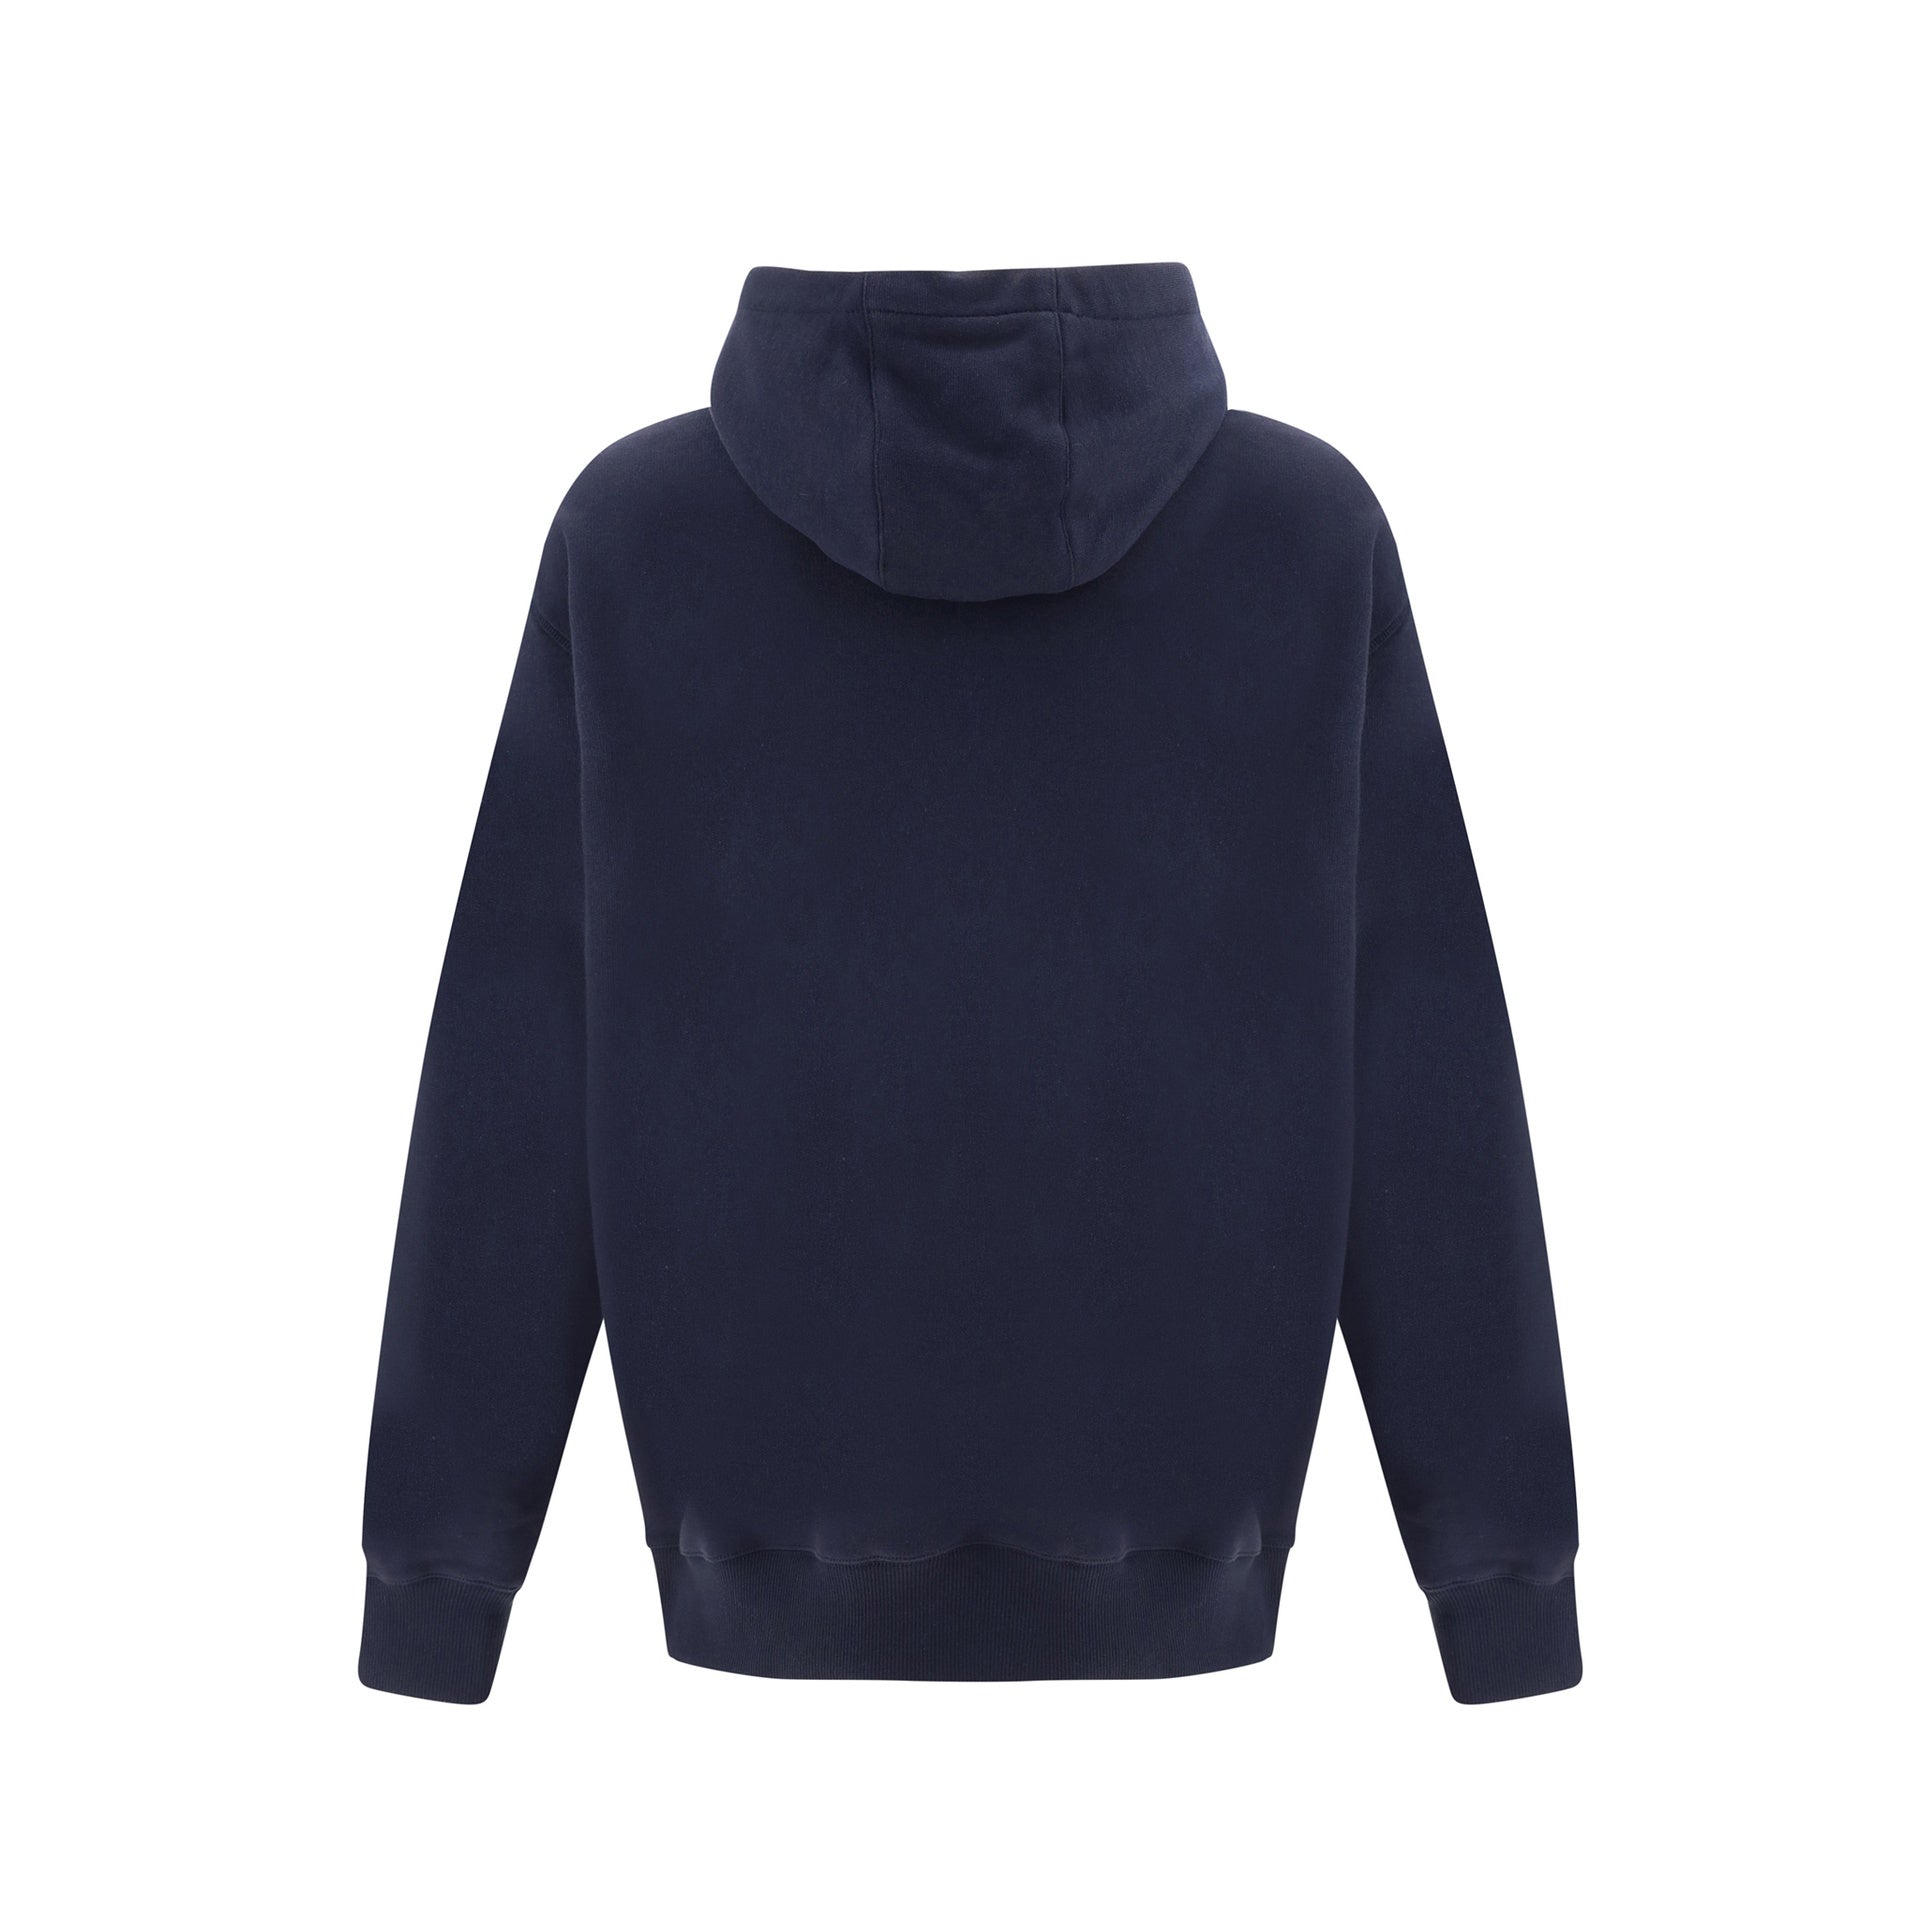 PRADA-Outlet-Sale-Prada Hooded Sweatshirt-MEN CLOTHING-ARCHIVIST